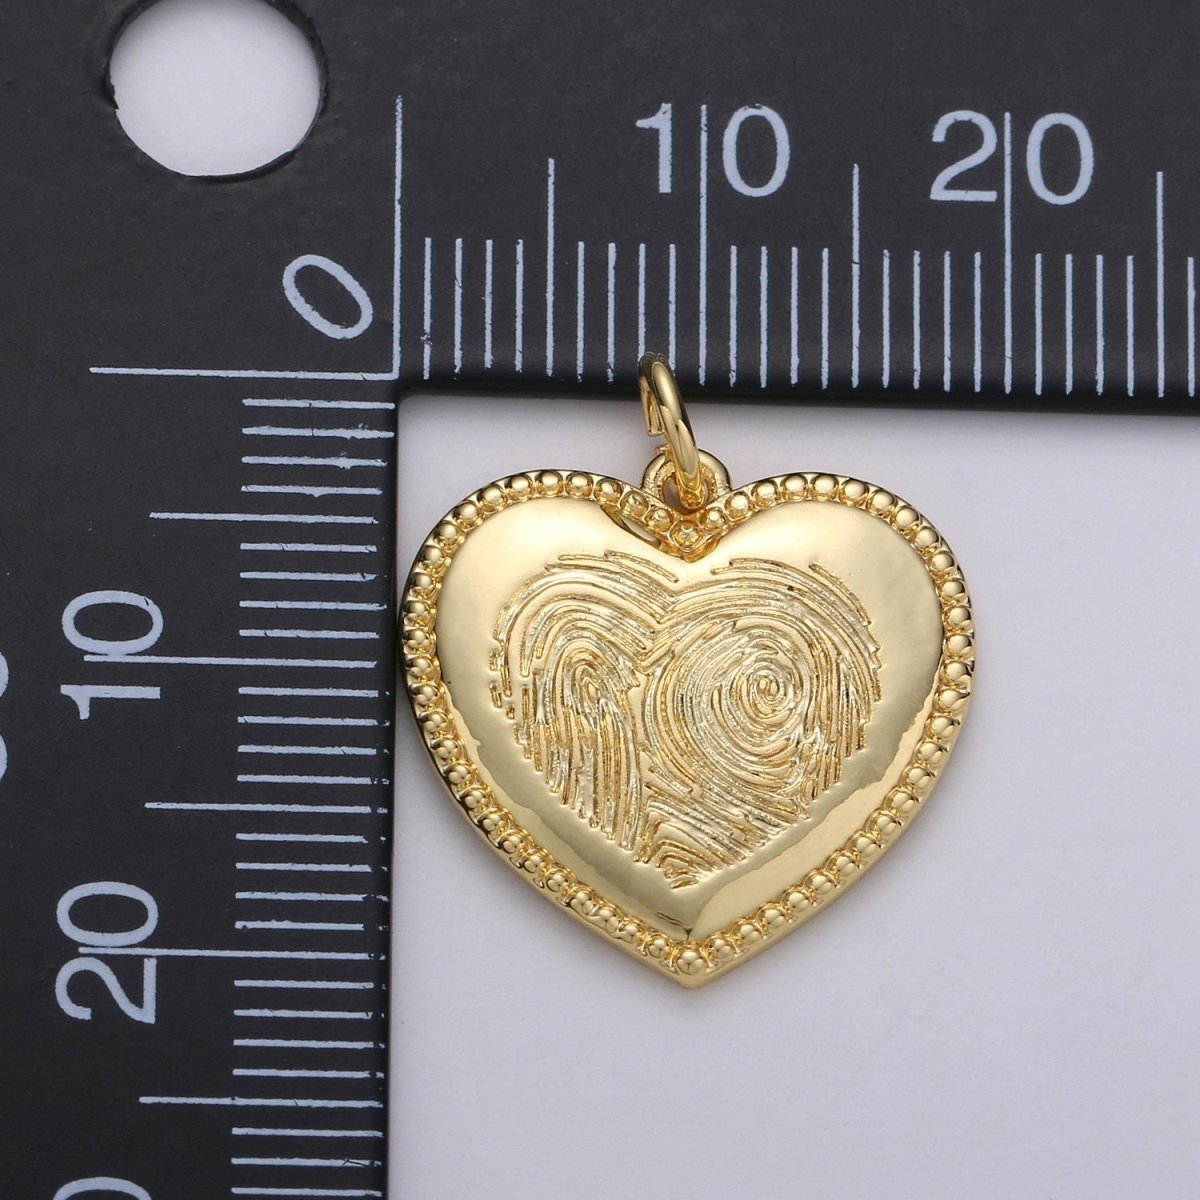 OS DEL - 14k Gold Filled Patterned Heart Charm, Heart Pendant Charm, Gold Filled Charm, For DIY Jewelry, Gold Color D-677 - DLUXCA